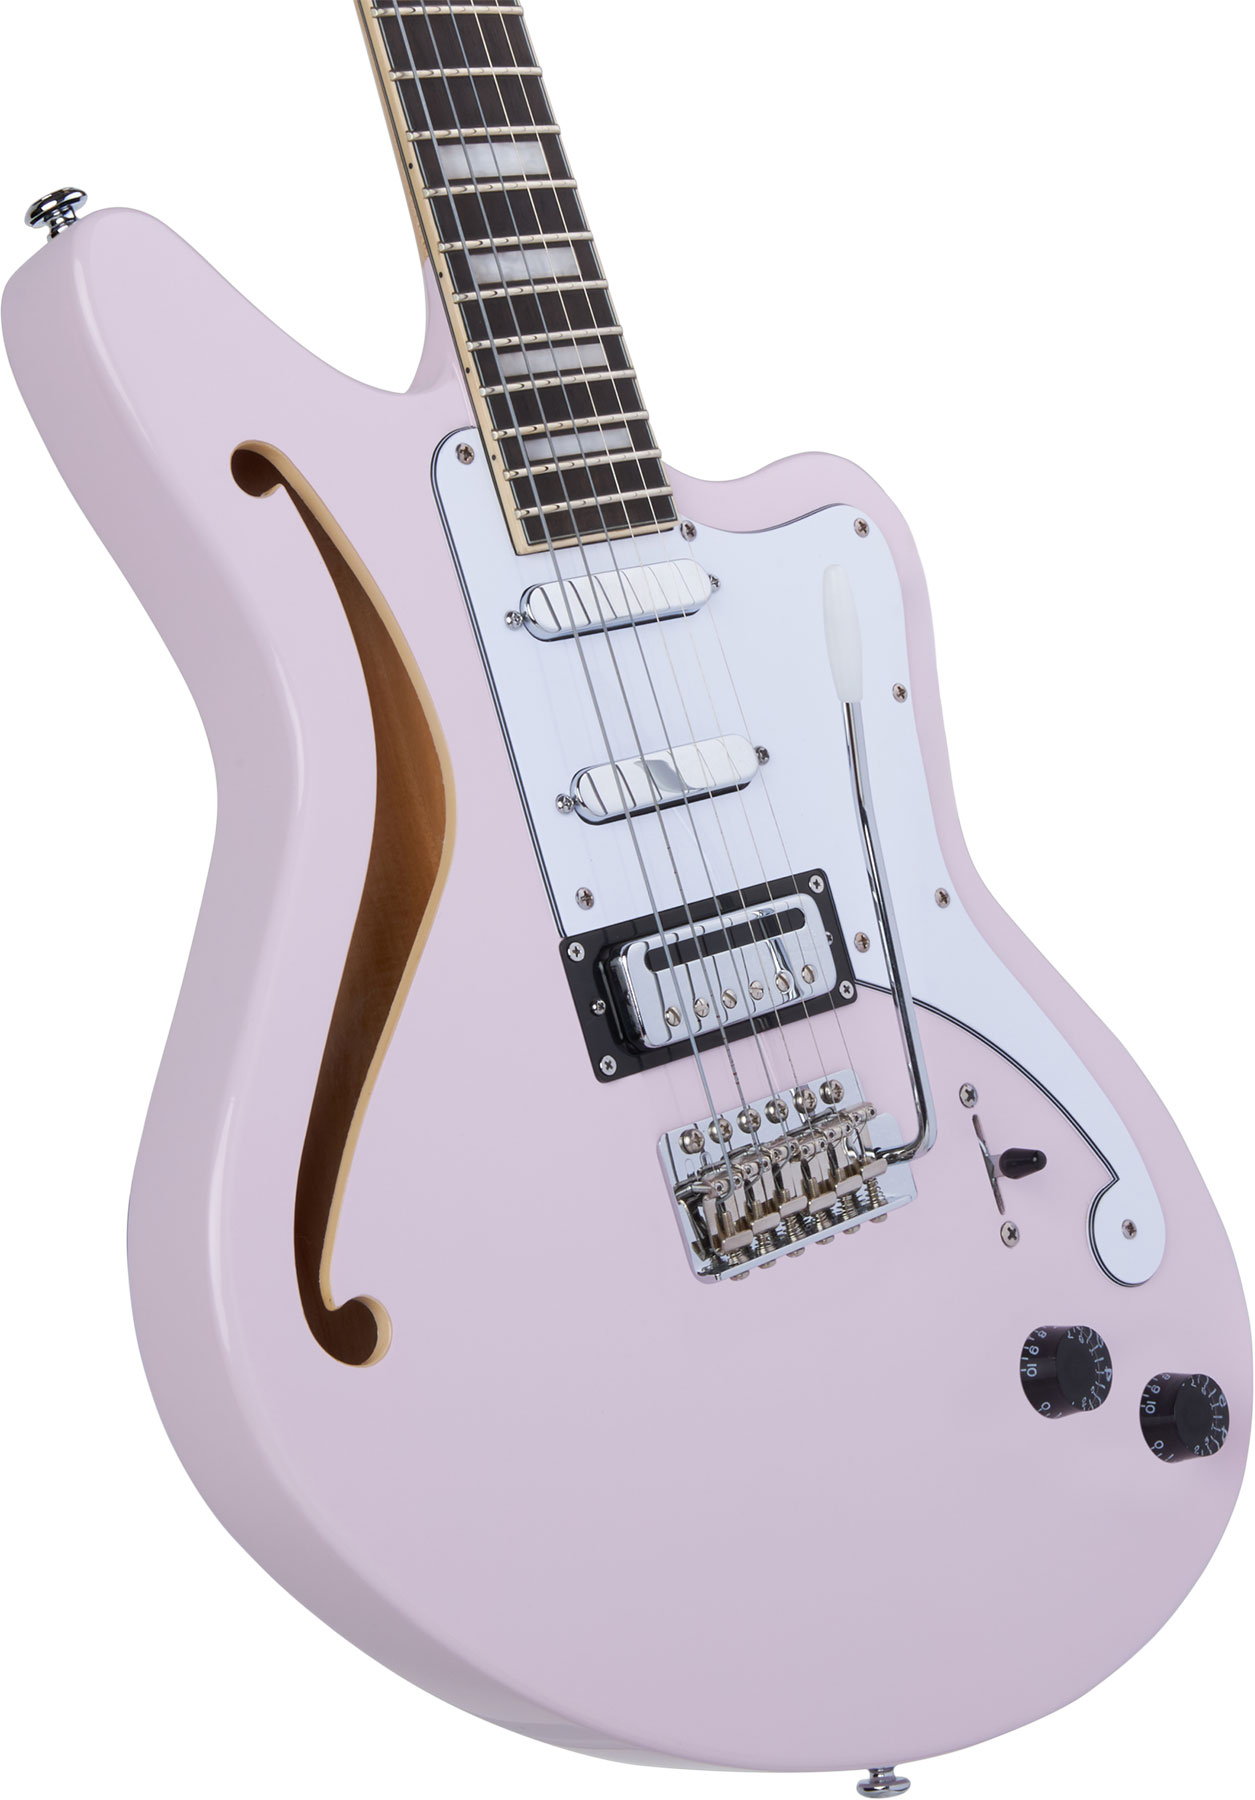 D'angelico Bedford Sh Premier Hss Trem Ova - Shell Pink - Semi hollow elektriche gitaar - Variation 3